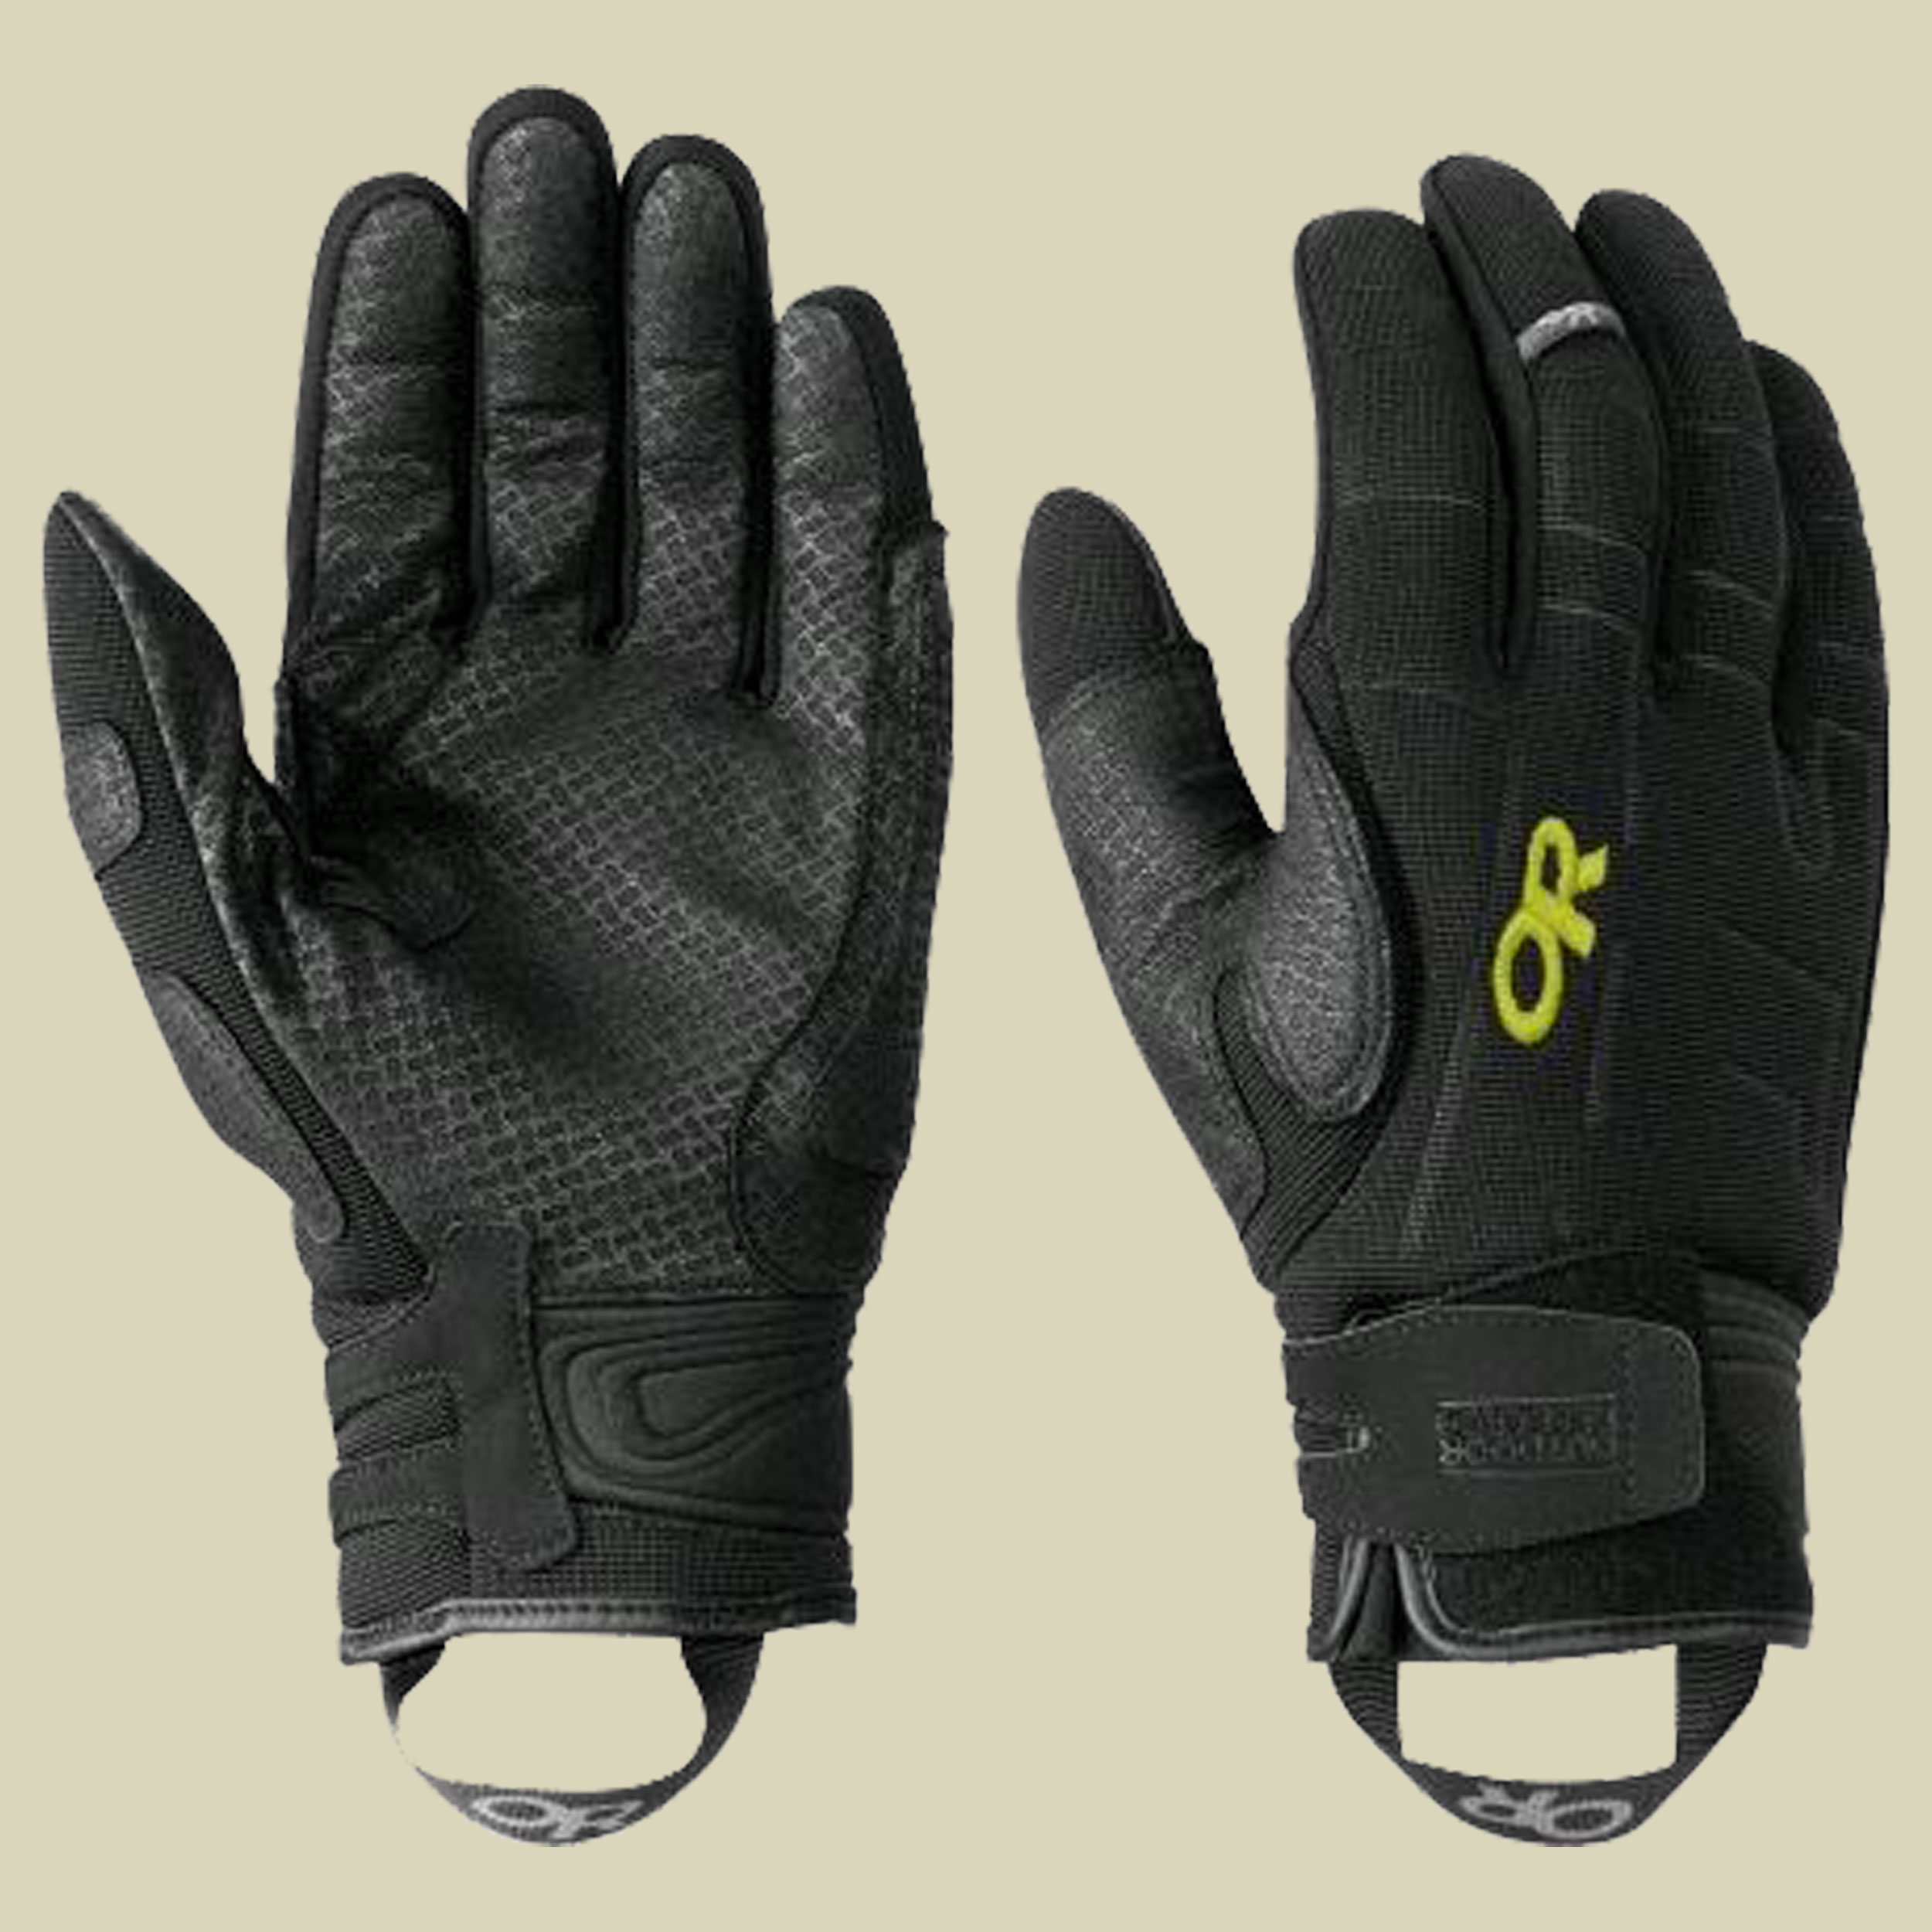 Alibi II Gloves Größe S Farbe black / lemongrass